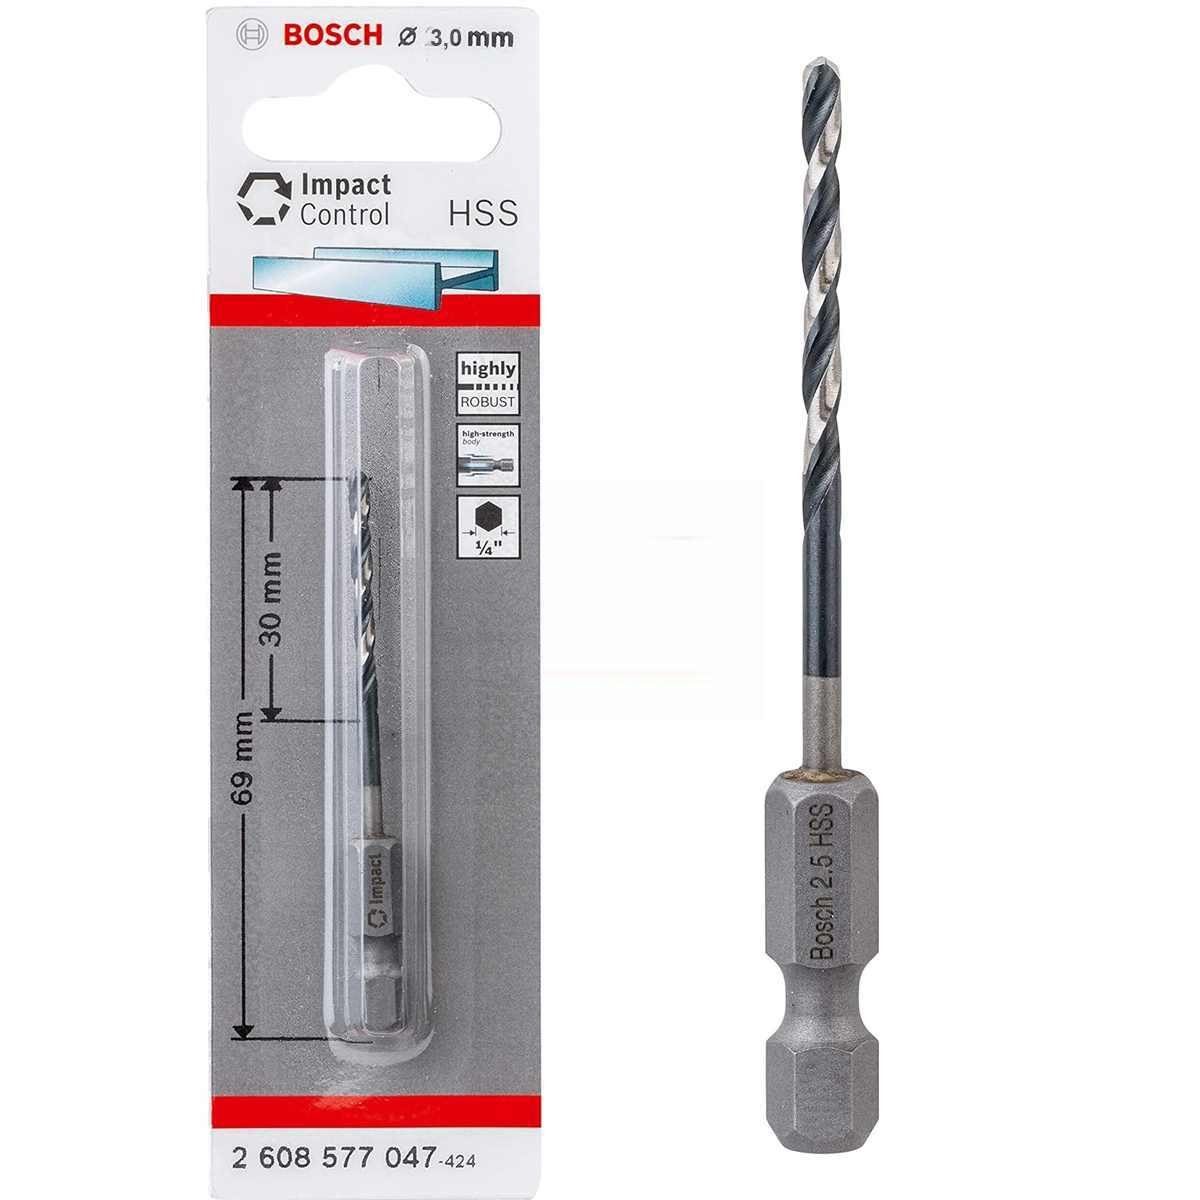 BOSCH Bohrer- und Bitset Bosch Professionel HSS Metall Bohrer 3 mm 1/4 Hex IMACT CONTROL Sechsk